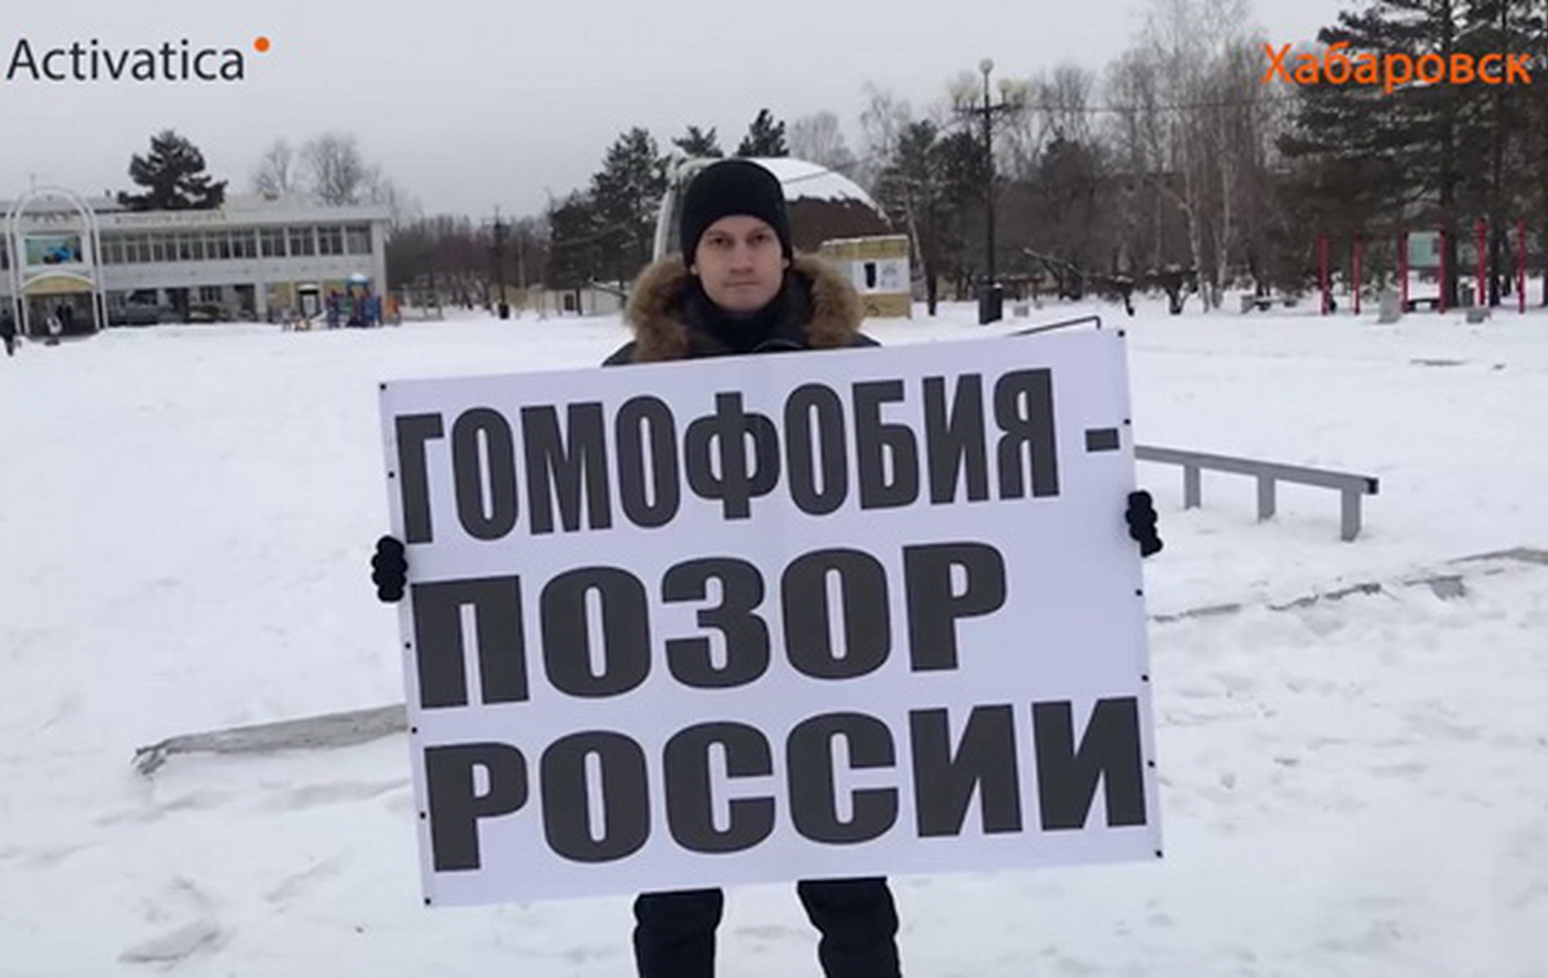 Russia blocks 23 “LGBT propaganda” websites